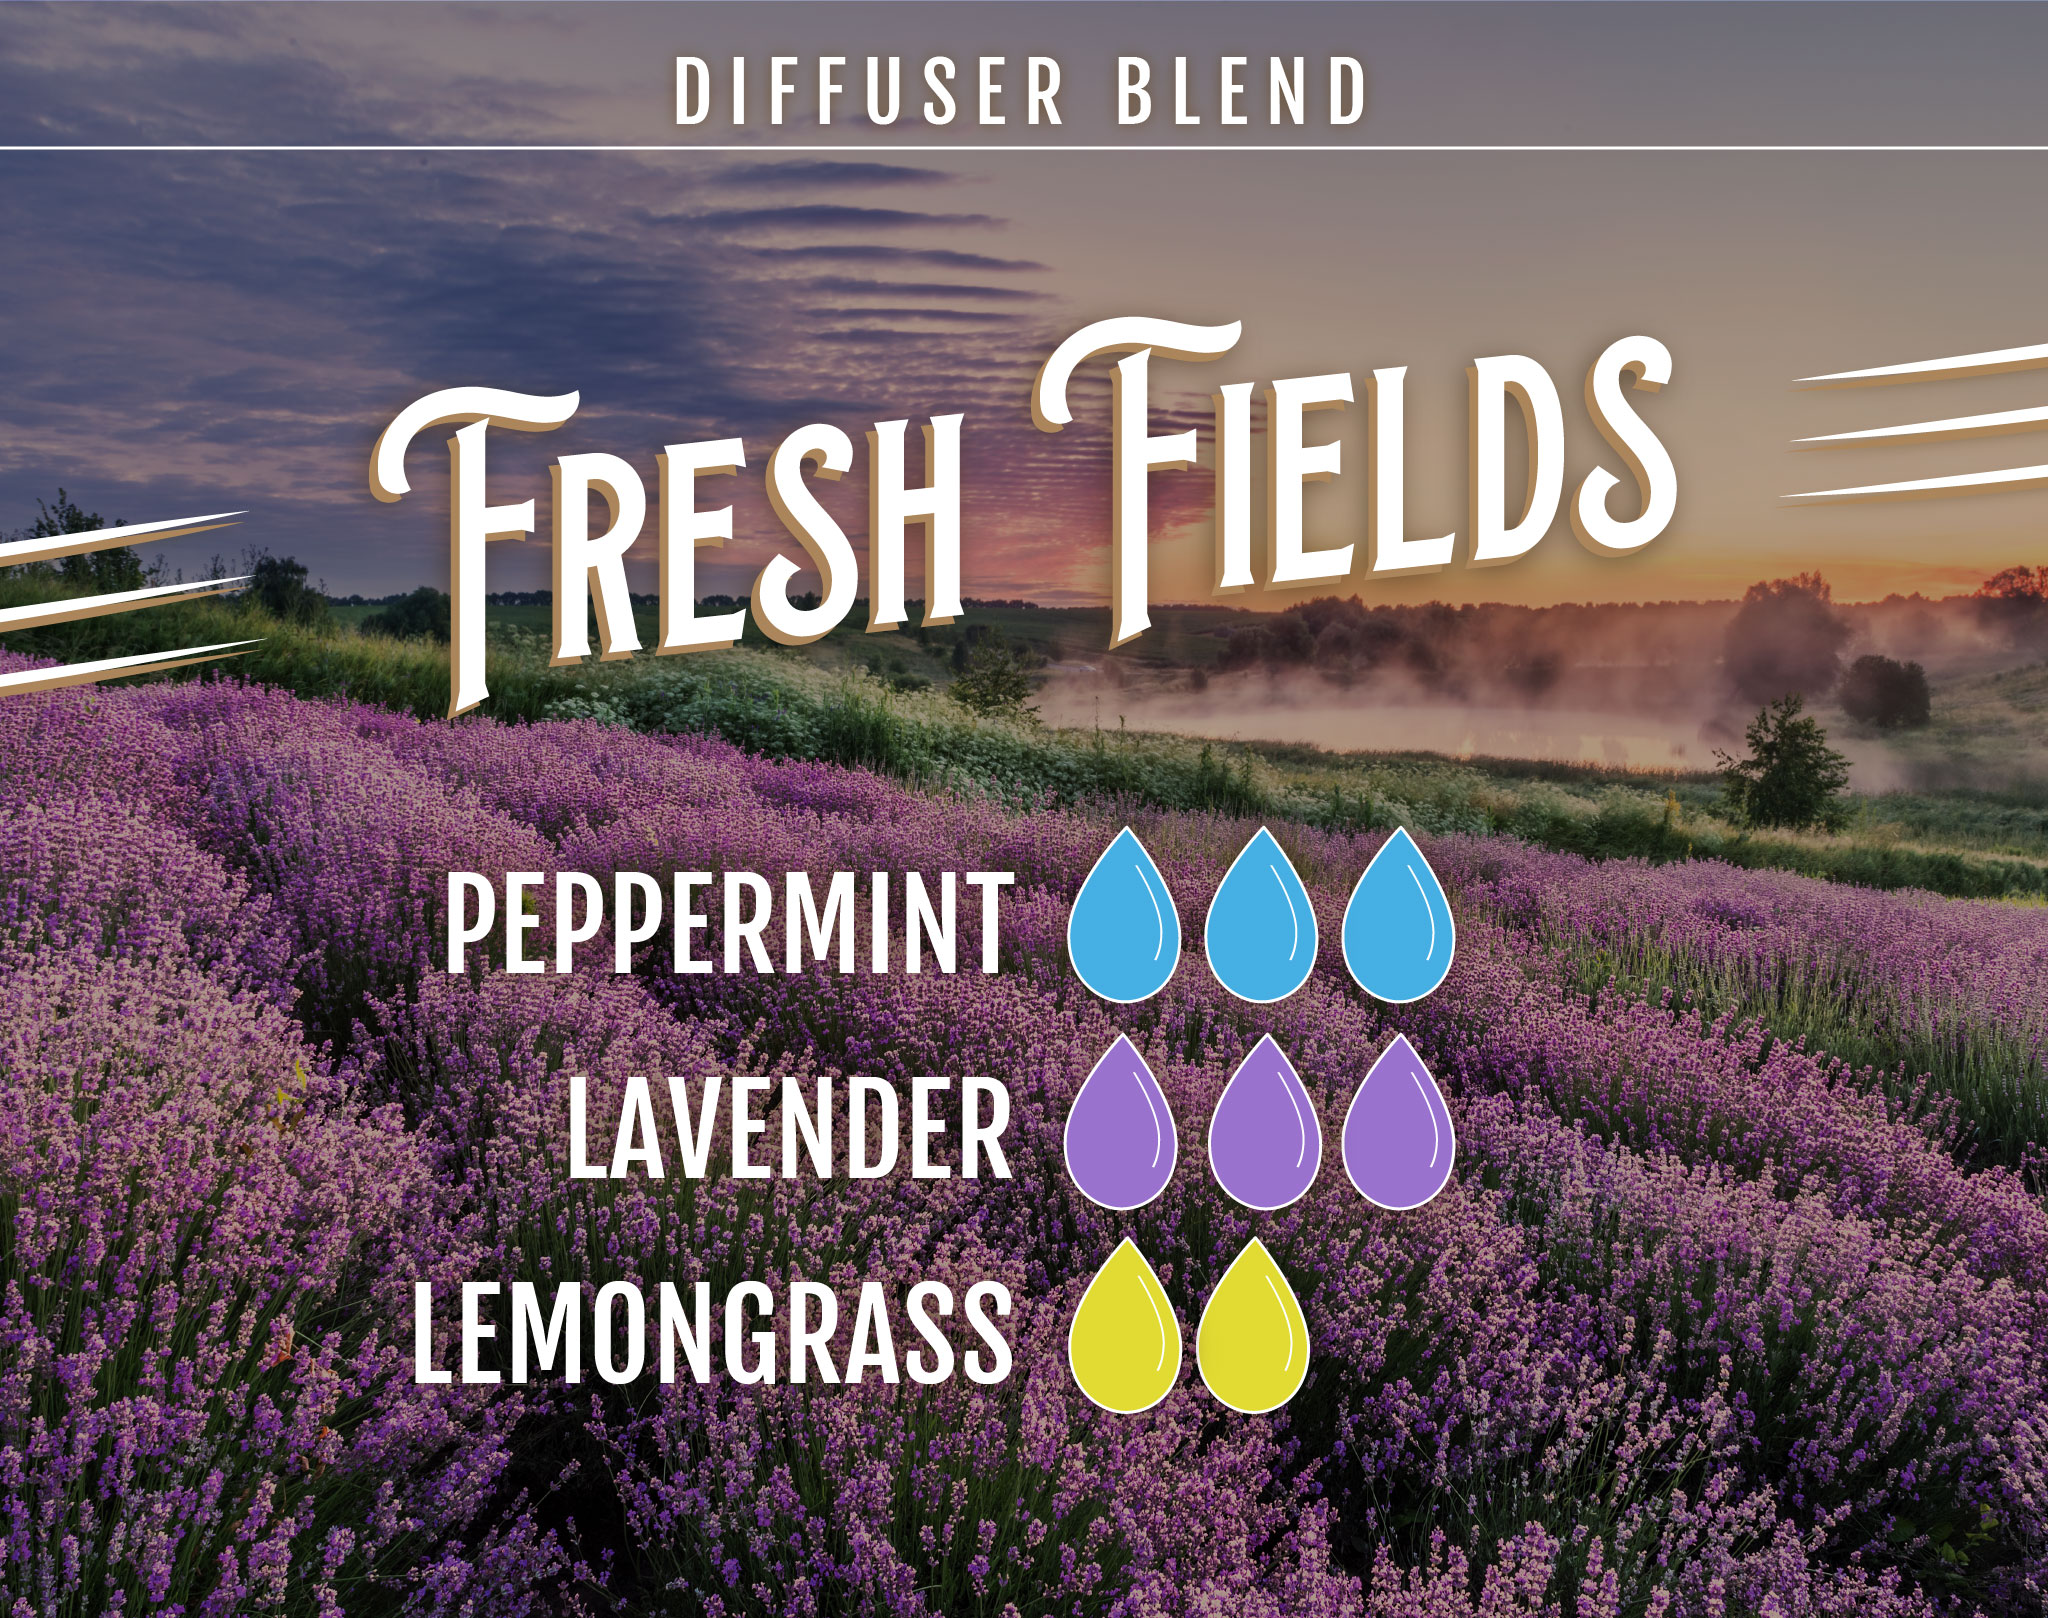 Fresh Fields Essential Oil (EO)Diffuser Blend - 3 Drops Peppermint EO, 3 Drops Lavender EO, 2 Drops Lemongrass EO